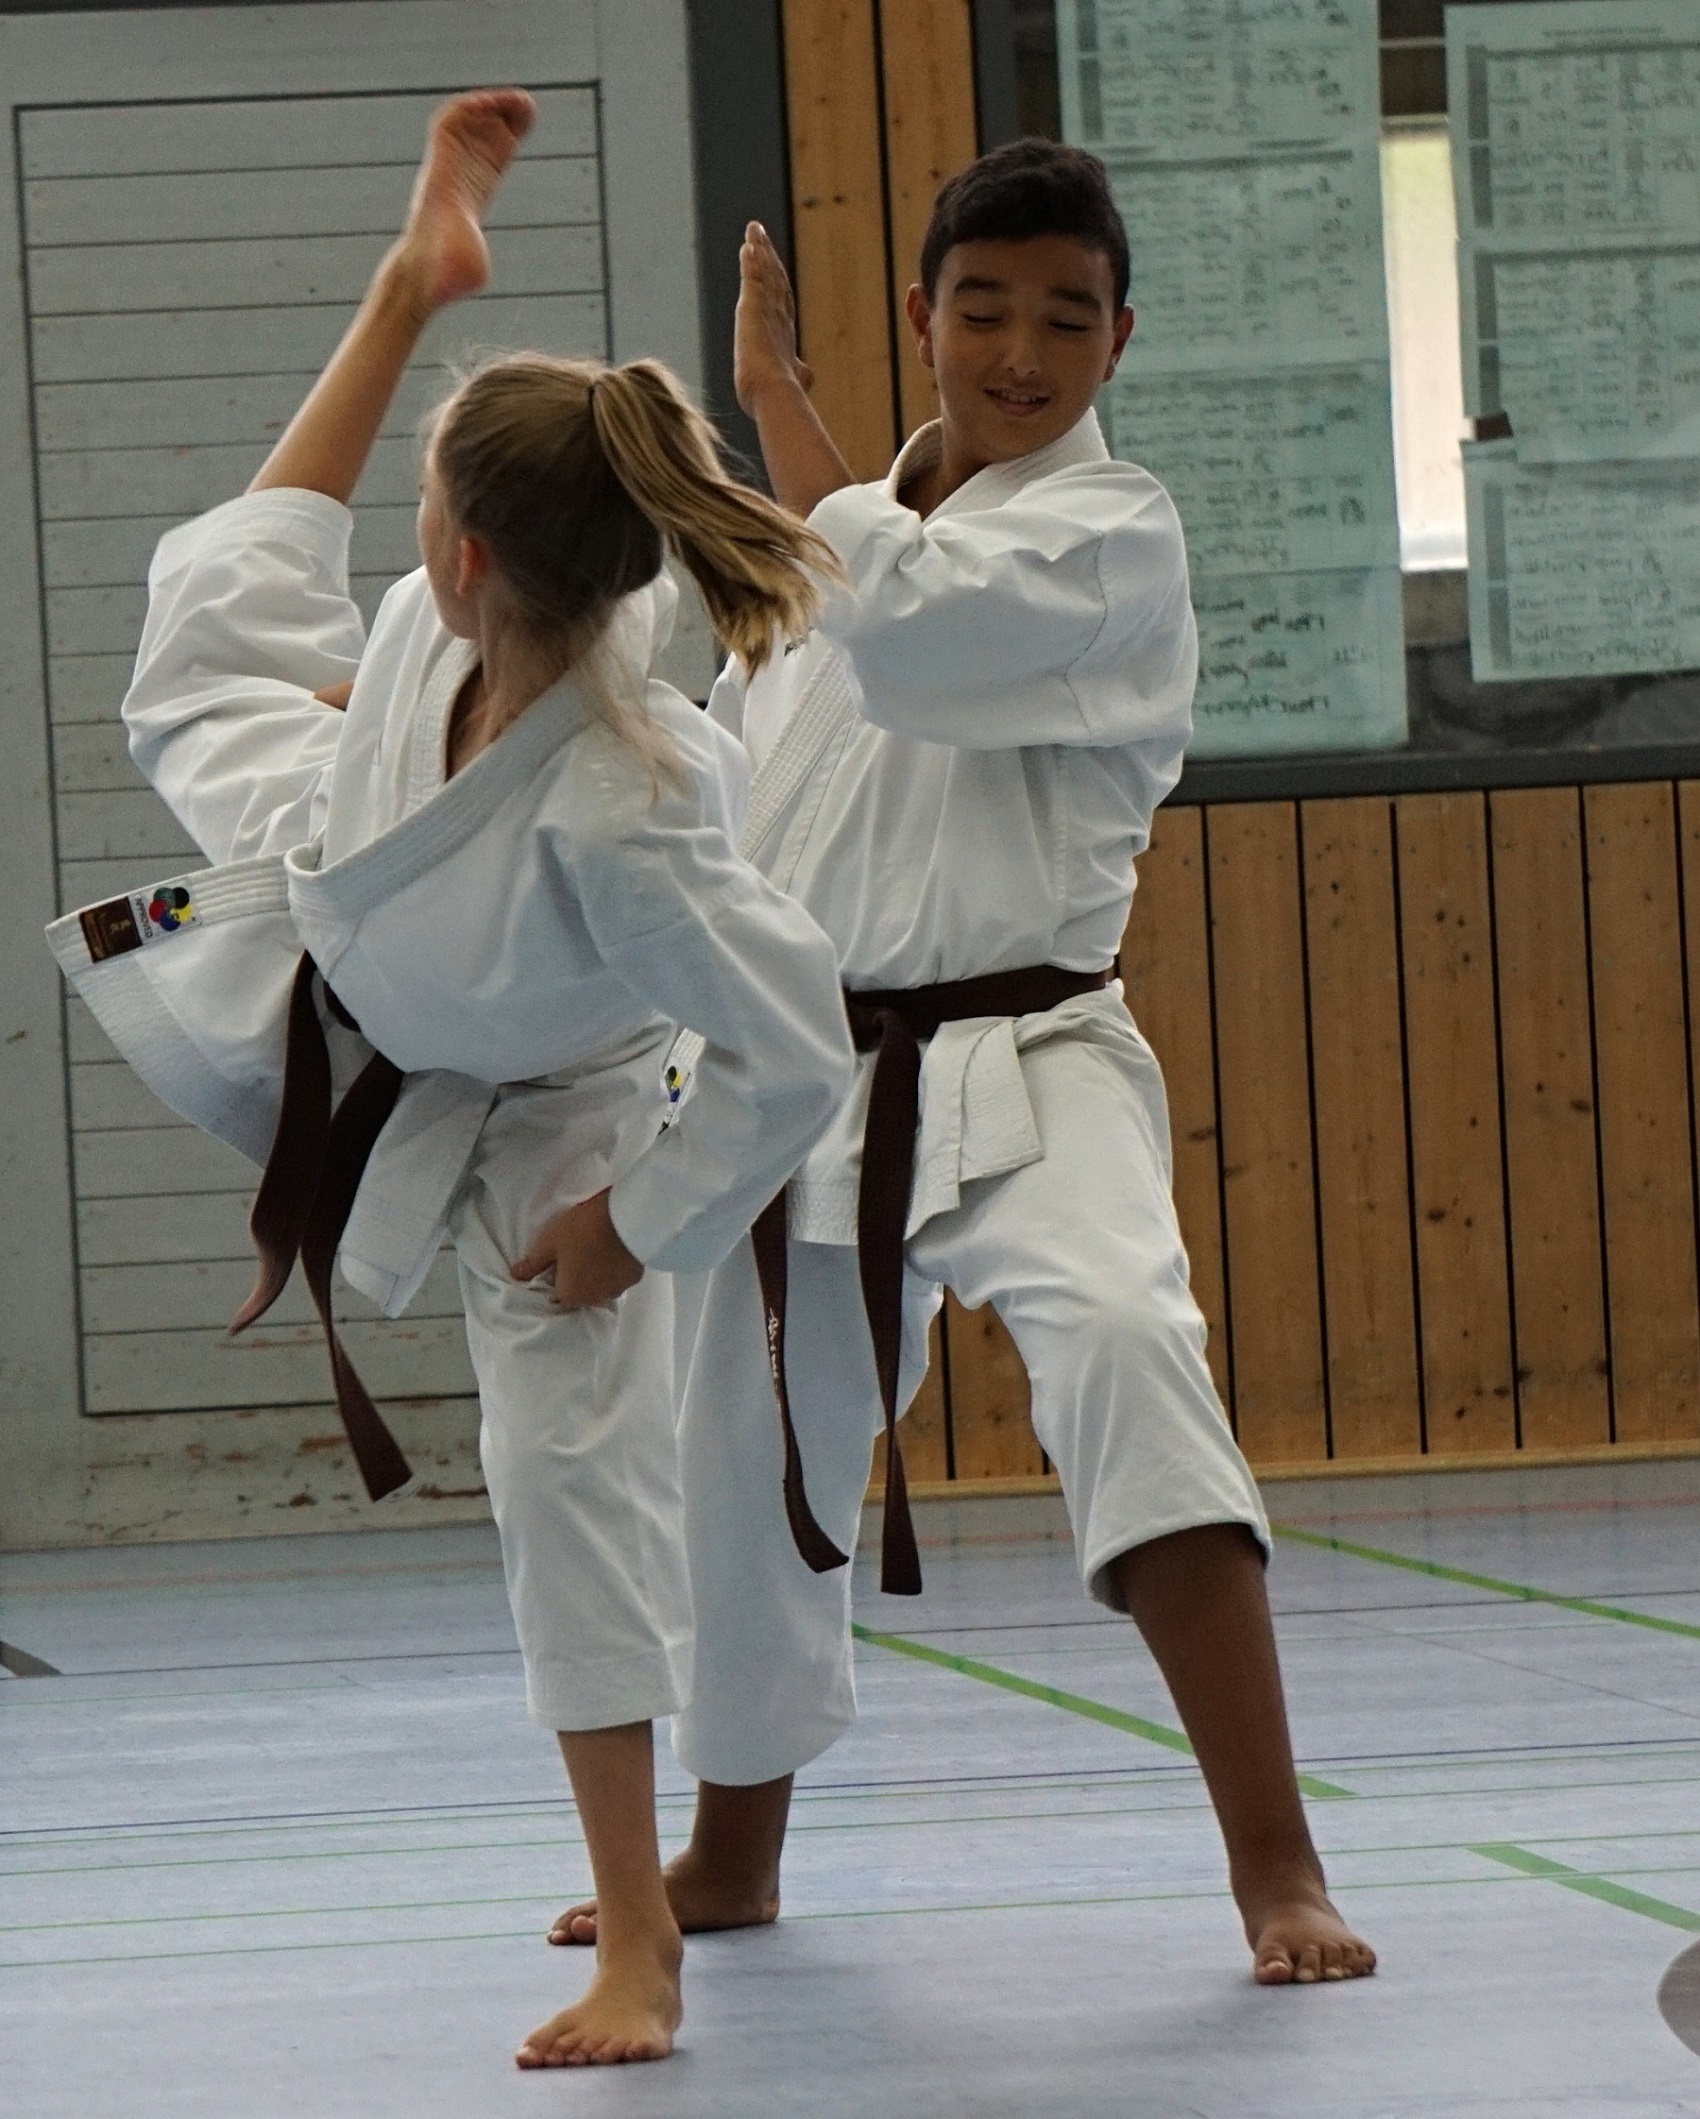 Karate: Junior karateka training for the championship, The World Karate Federation. 1700x2120 HD Wallpaper.